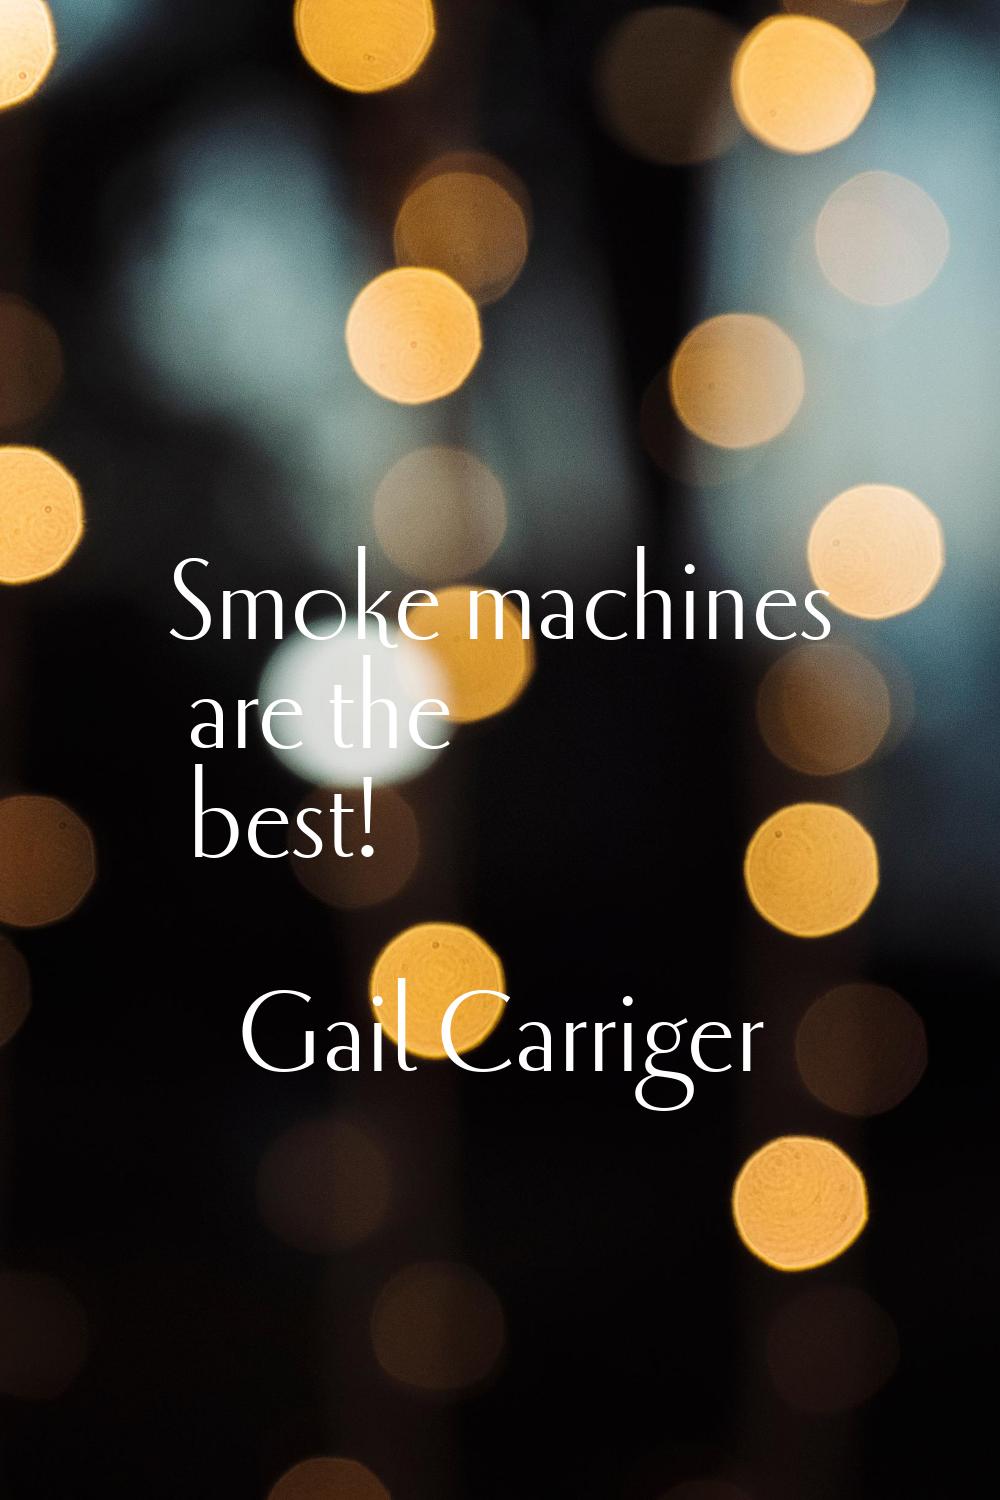 Smoke machines are the best!